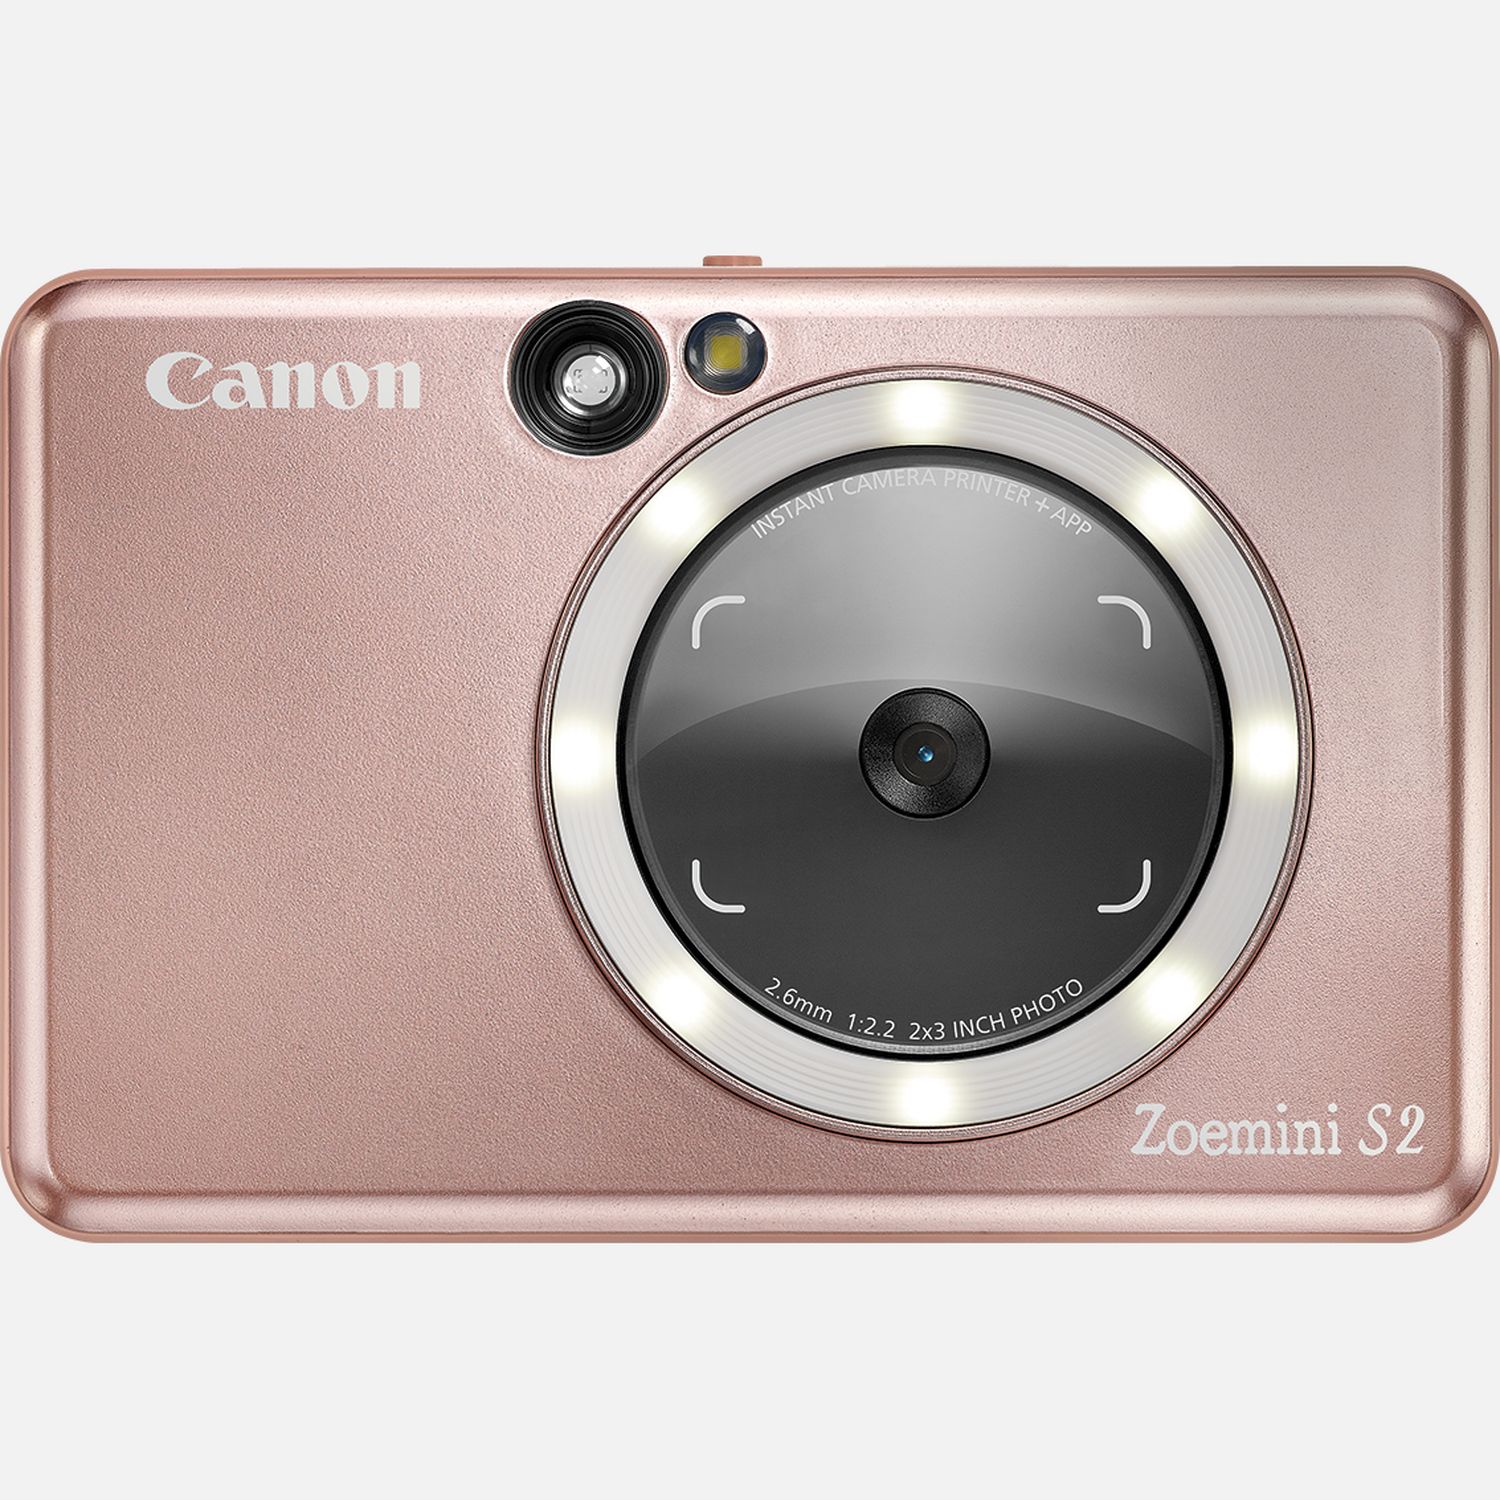 Imprimante photo couleur portable Canon Zoemini 2, rose doré +